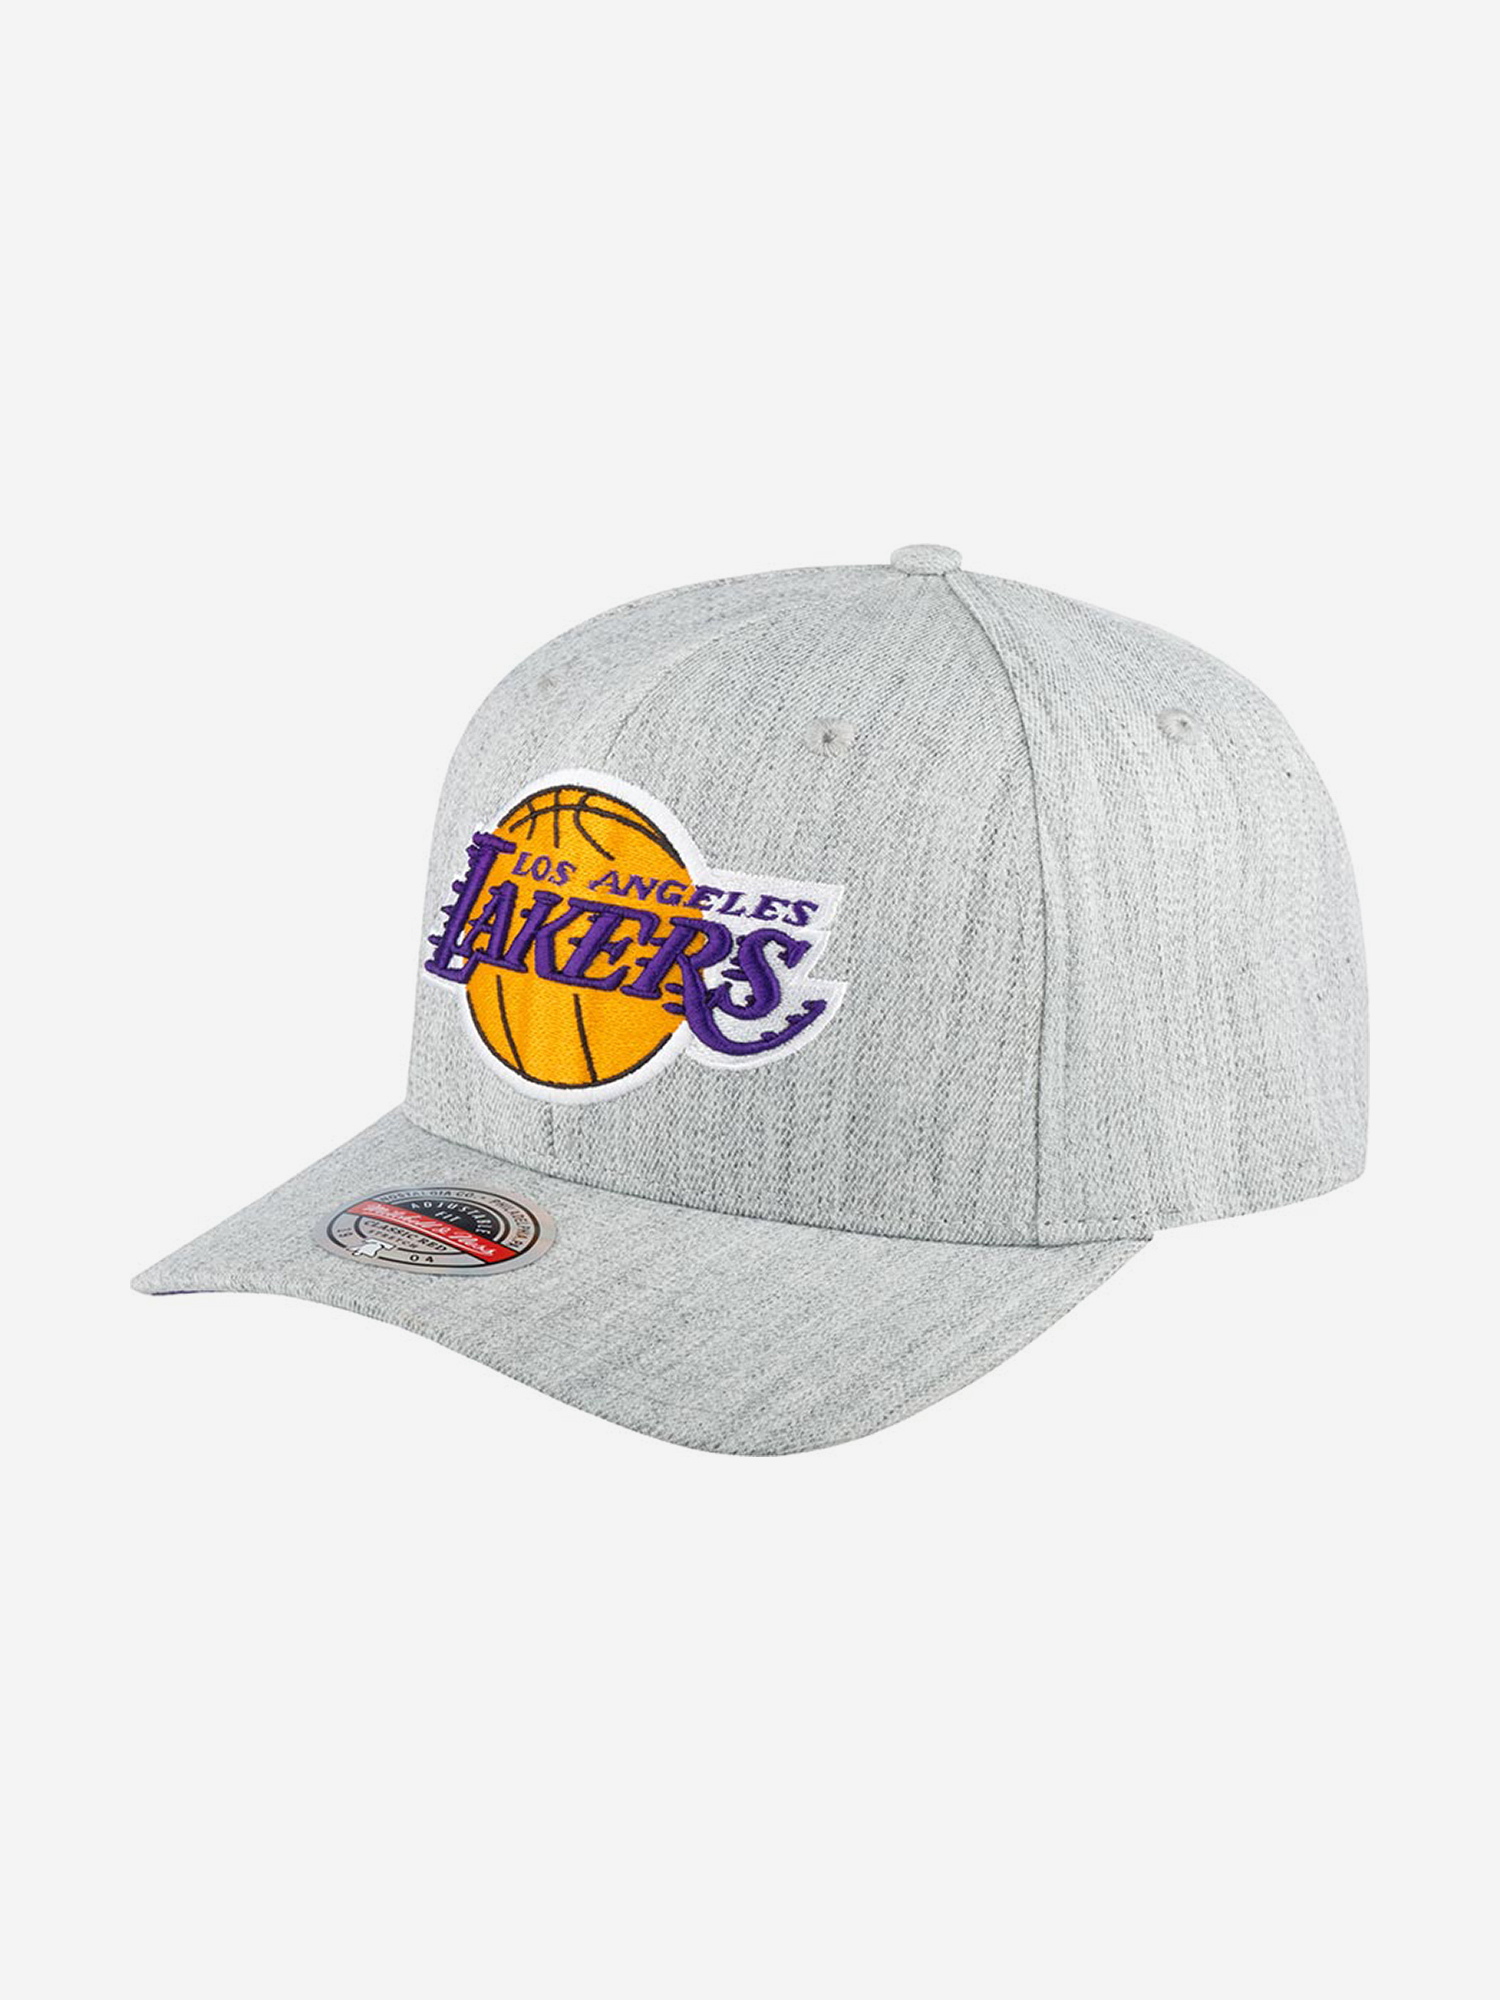 Бейсболка MITCHELL NESS 6HSSMM19363-LALGYHT Los Angeles Lakers NBA (серый), Серый шапка с отворотом mitchell ness eu175 teamtalk gry detroit red wings nhl серый серый